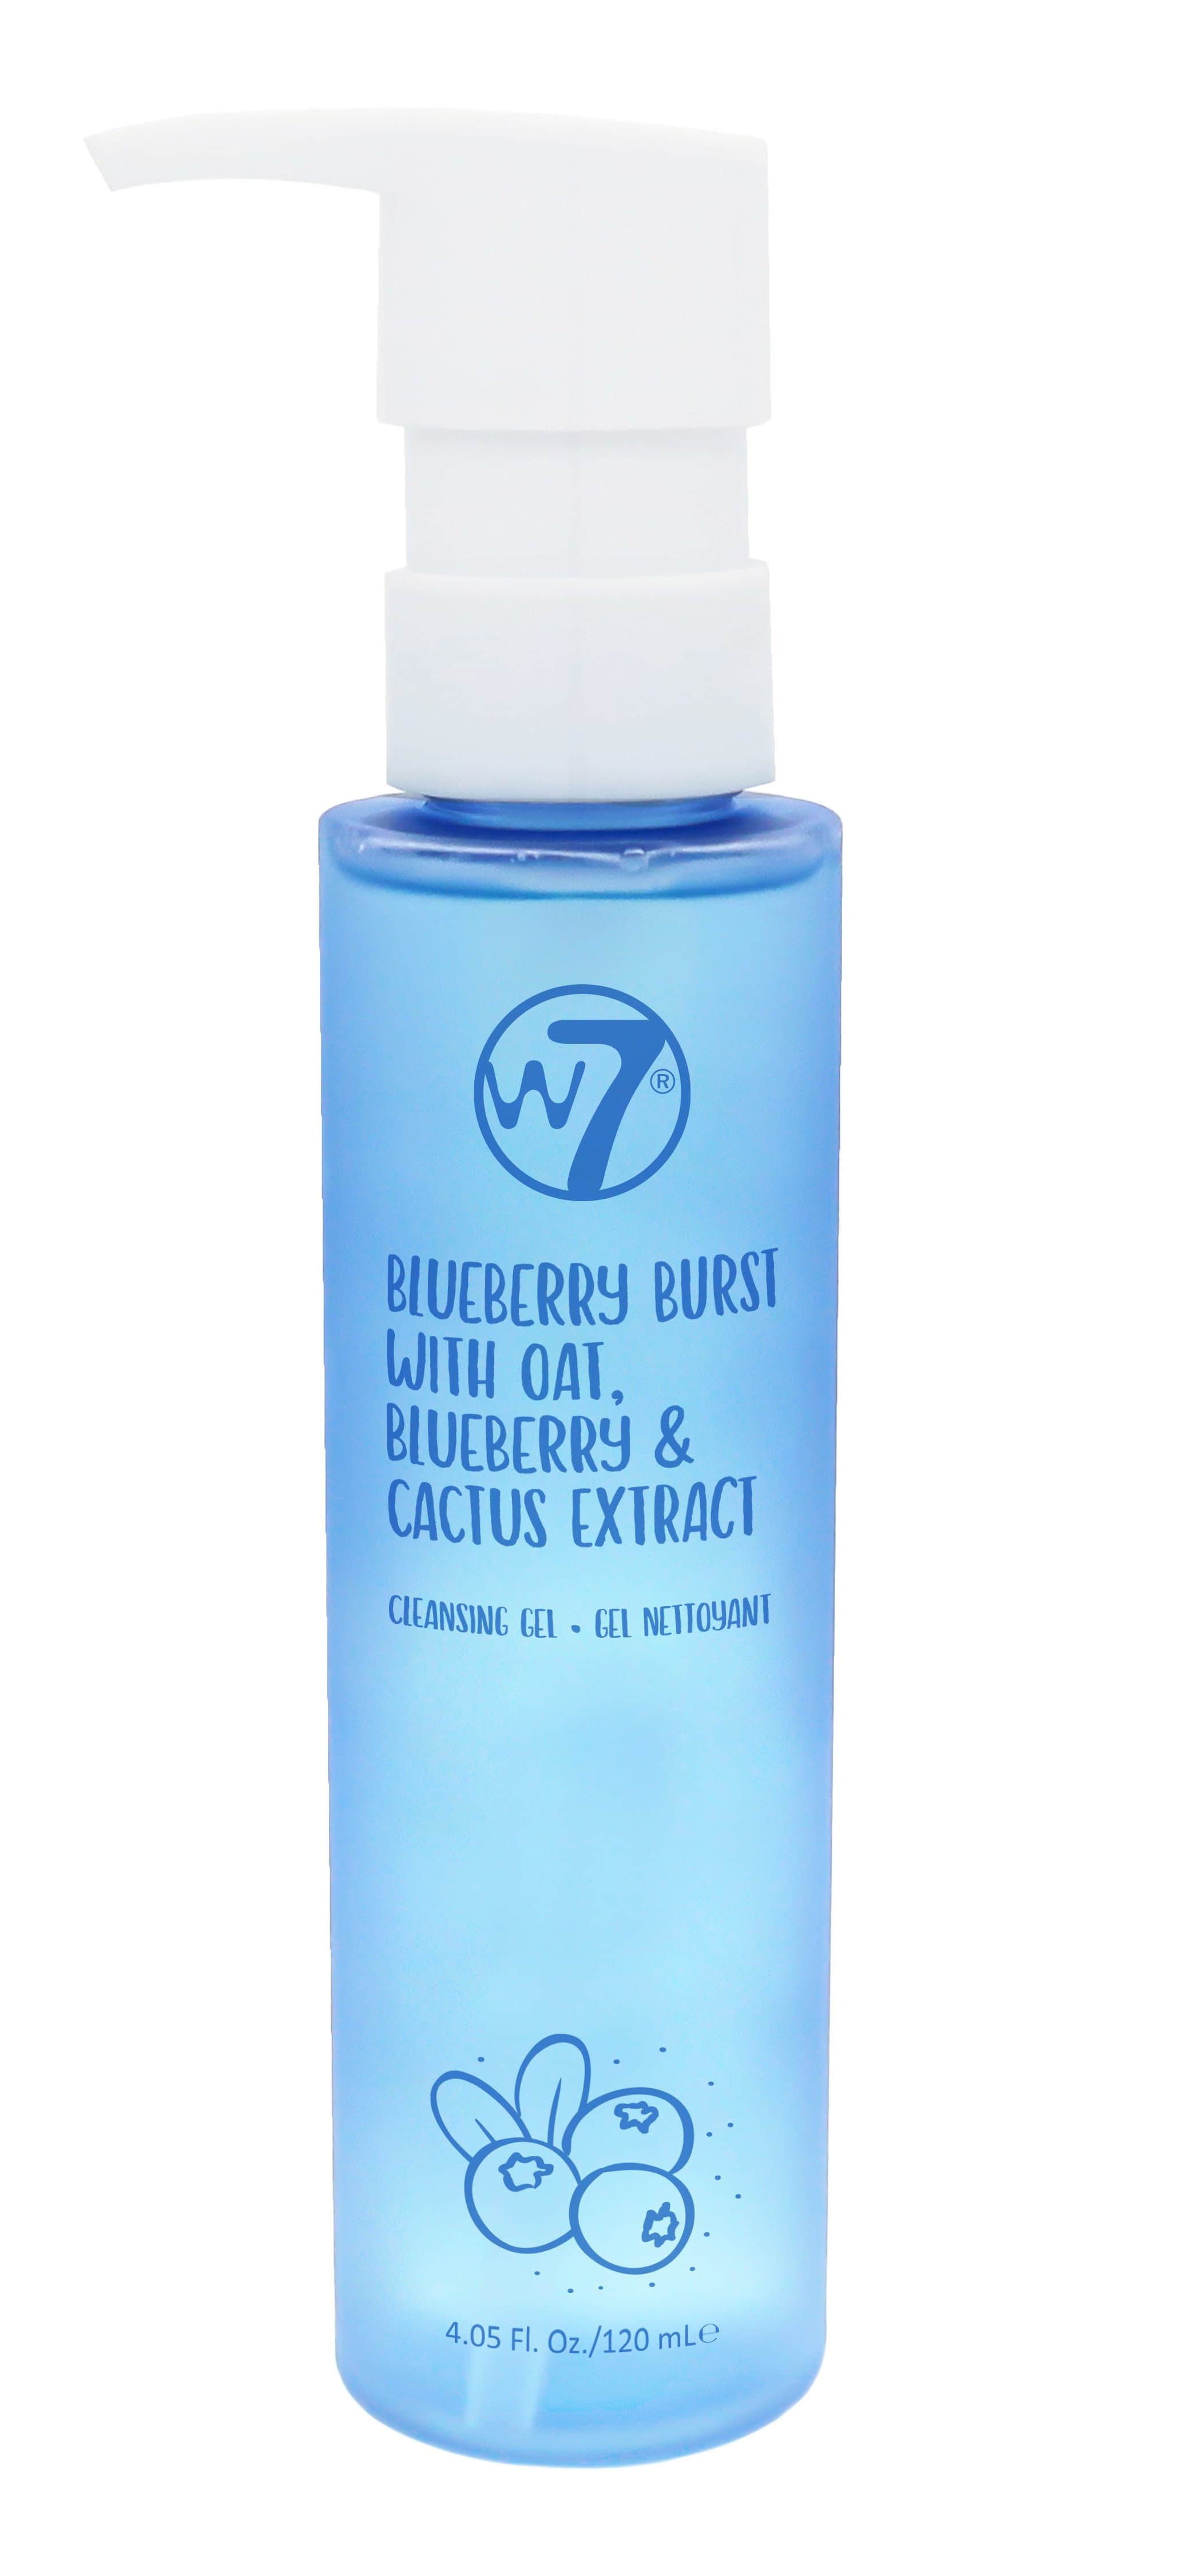 W7 Blueberry Burst Face Cleansing Gel